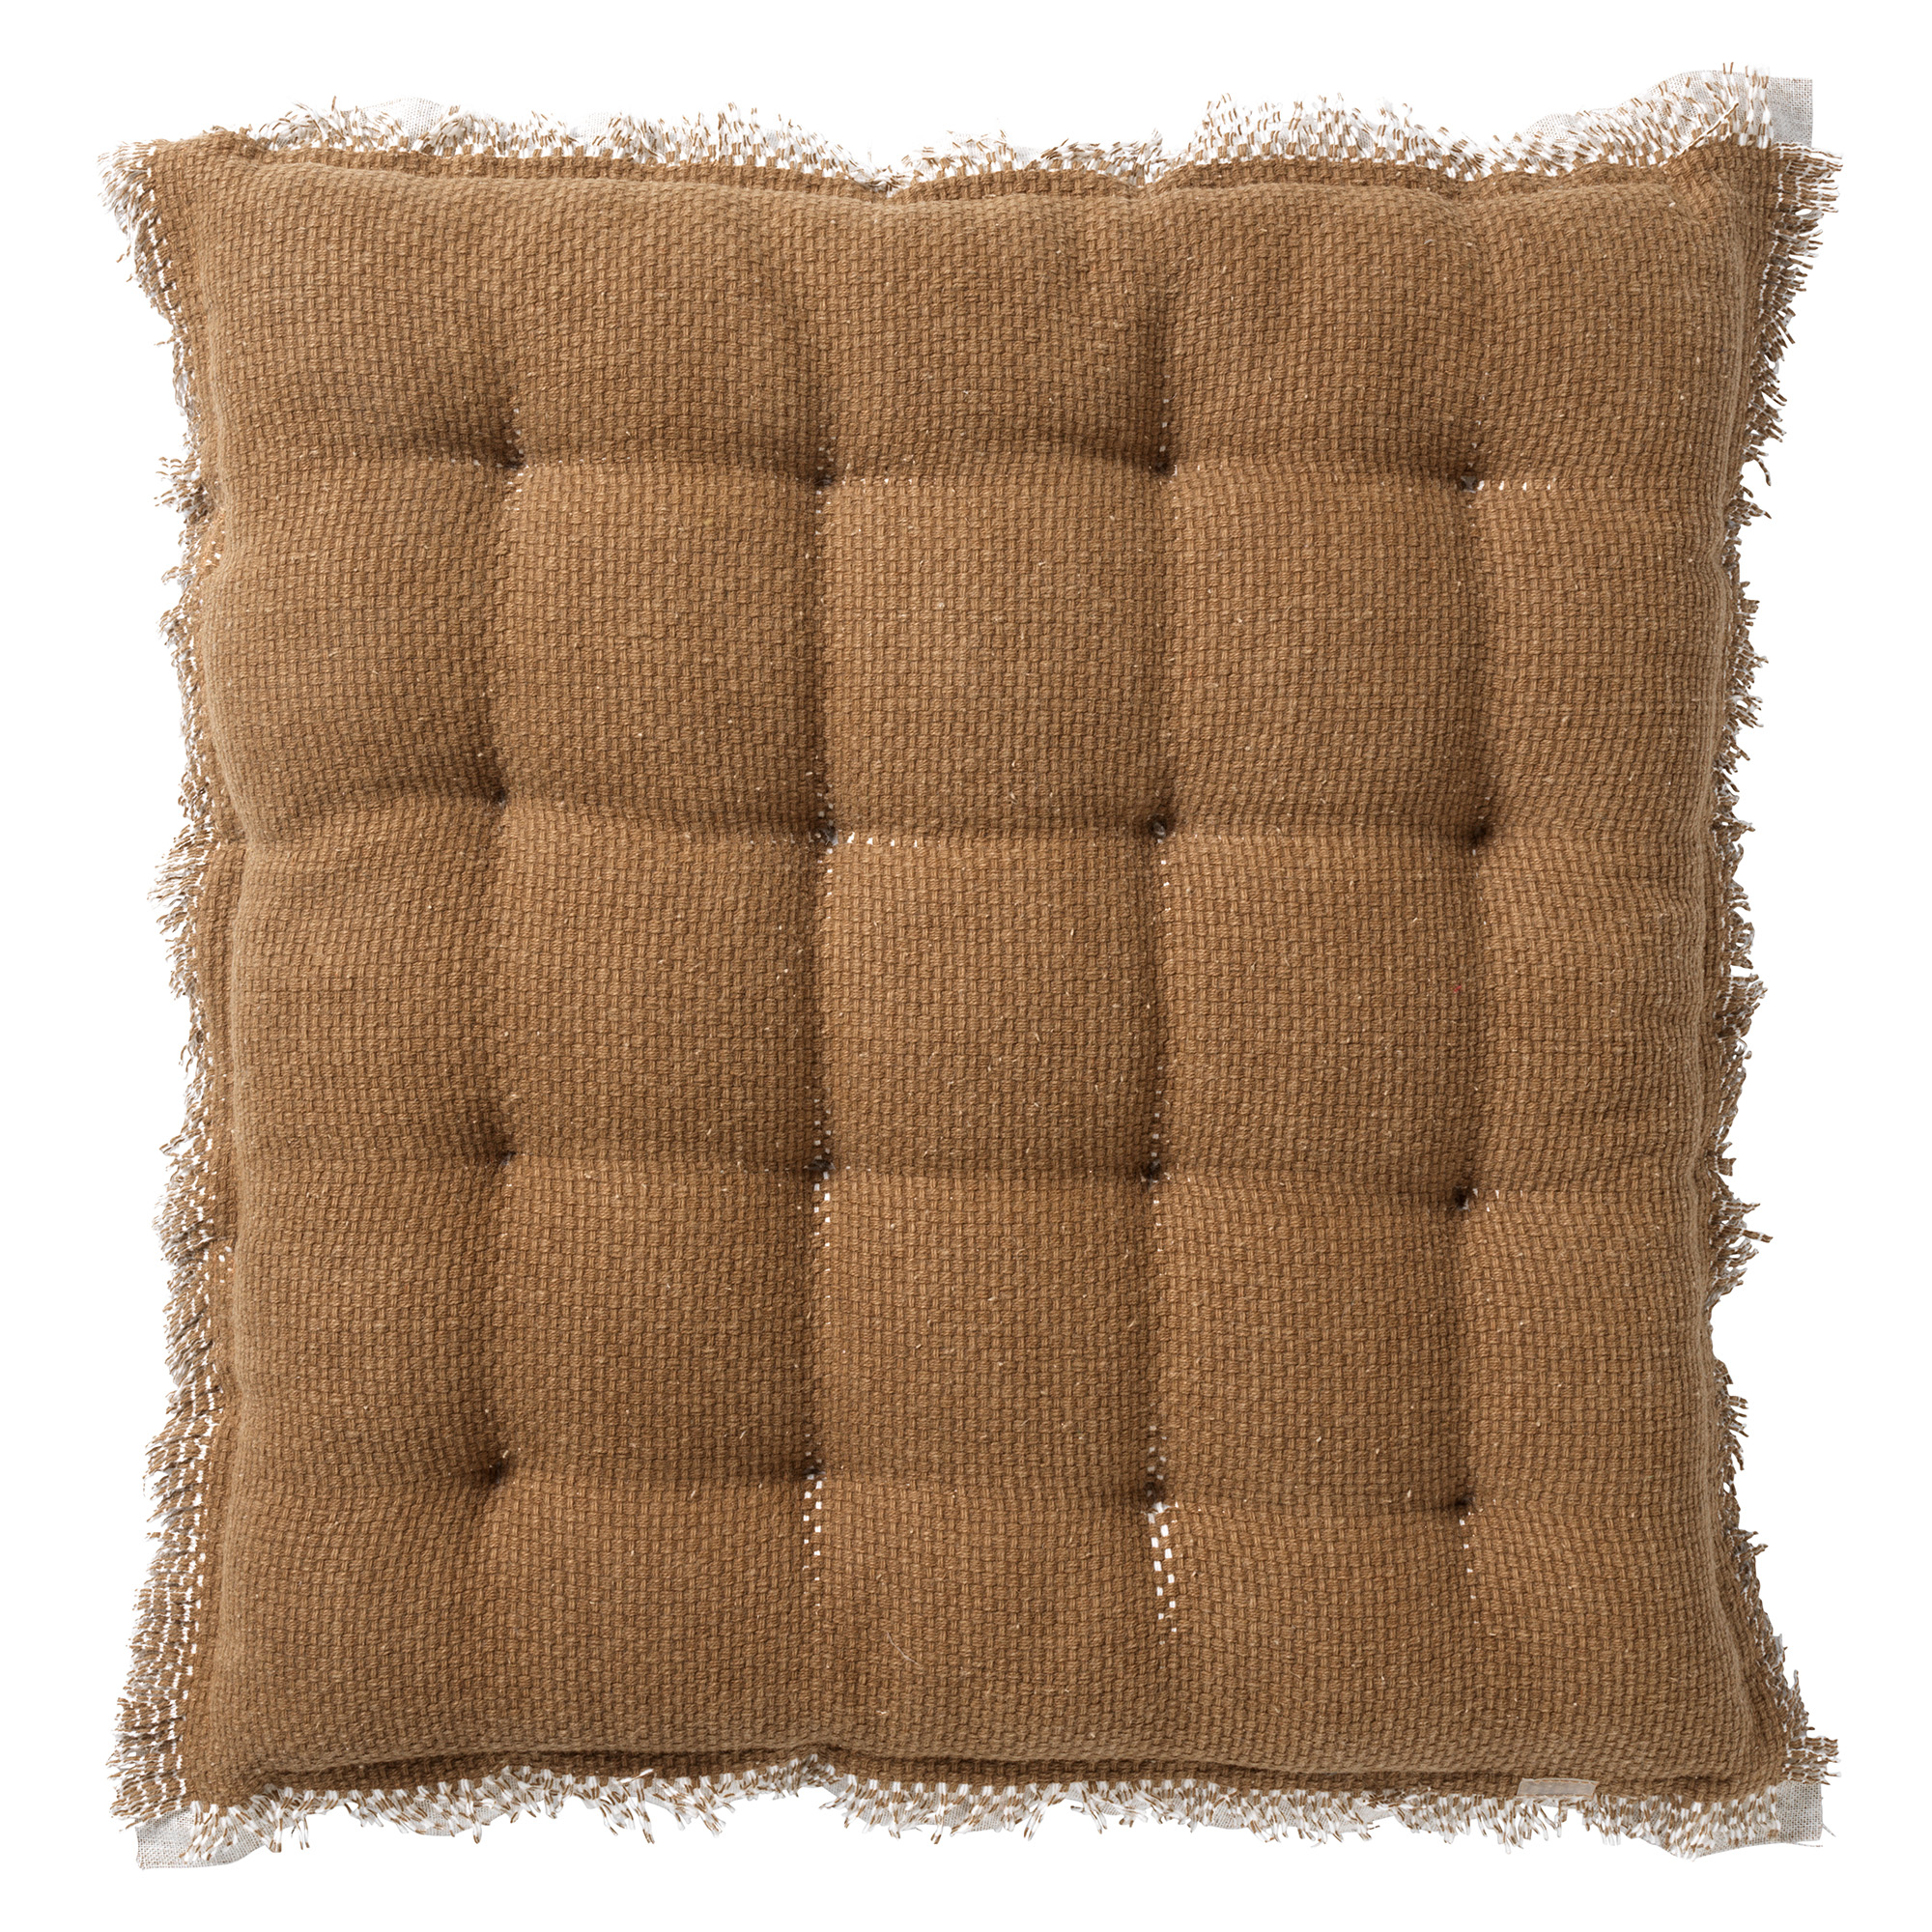 BURTO - Seat pad cushion coton Tobacco Brown 40x40 cm